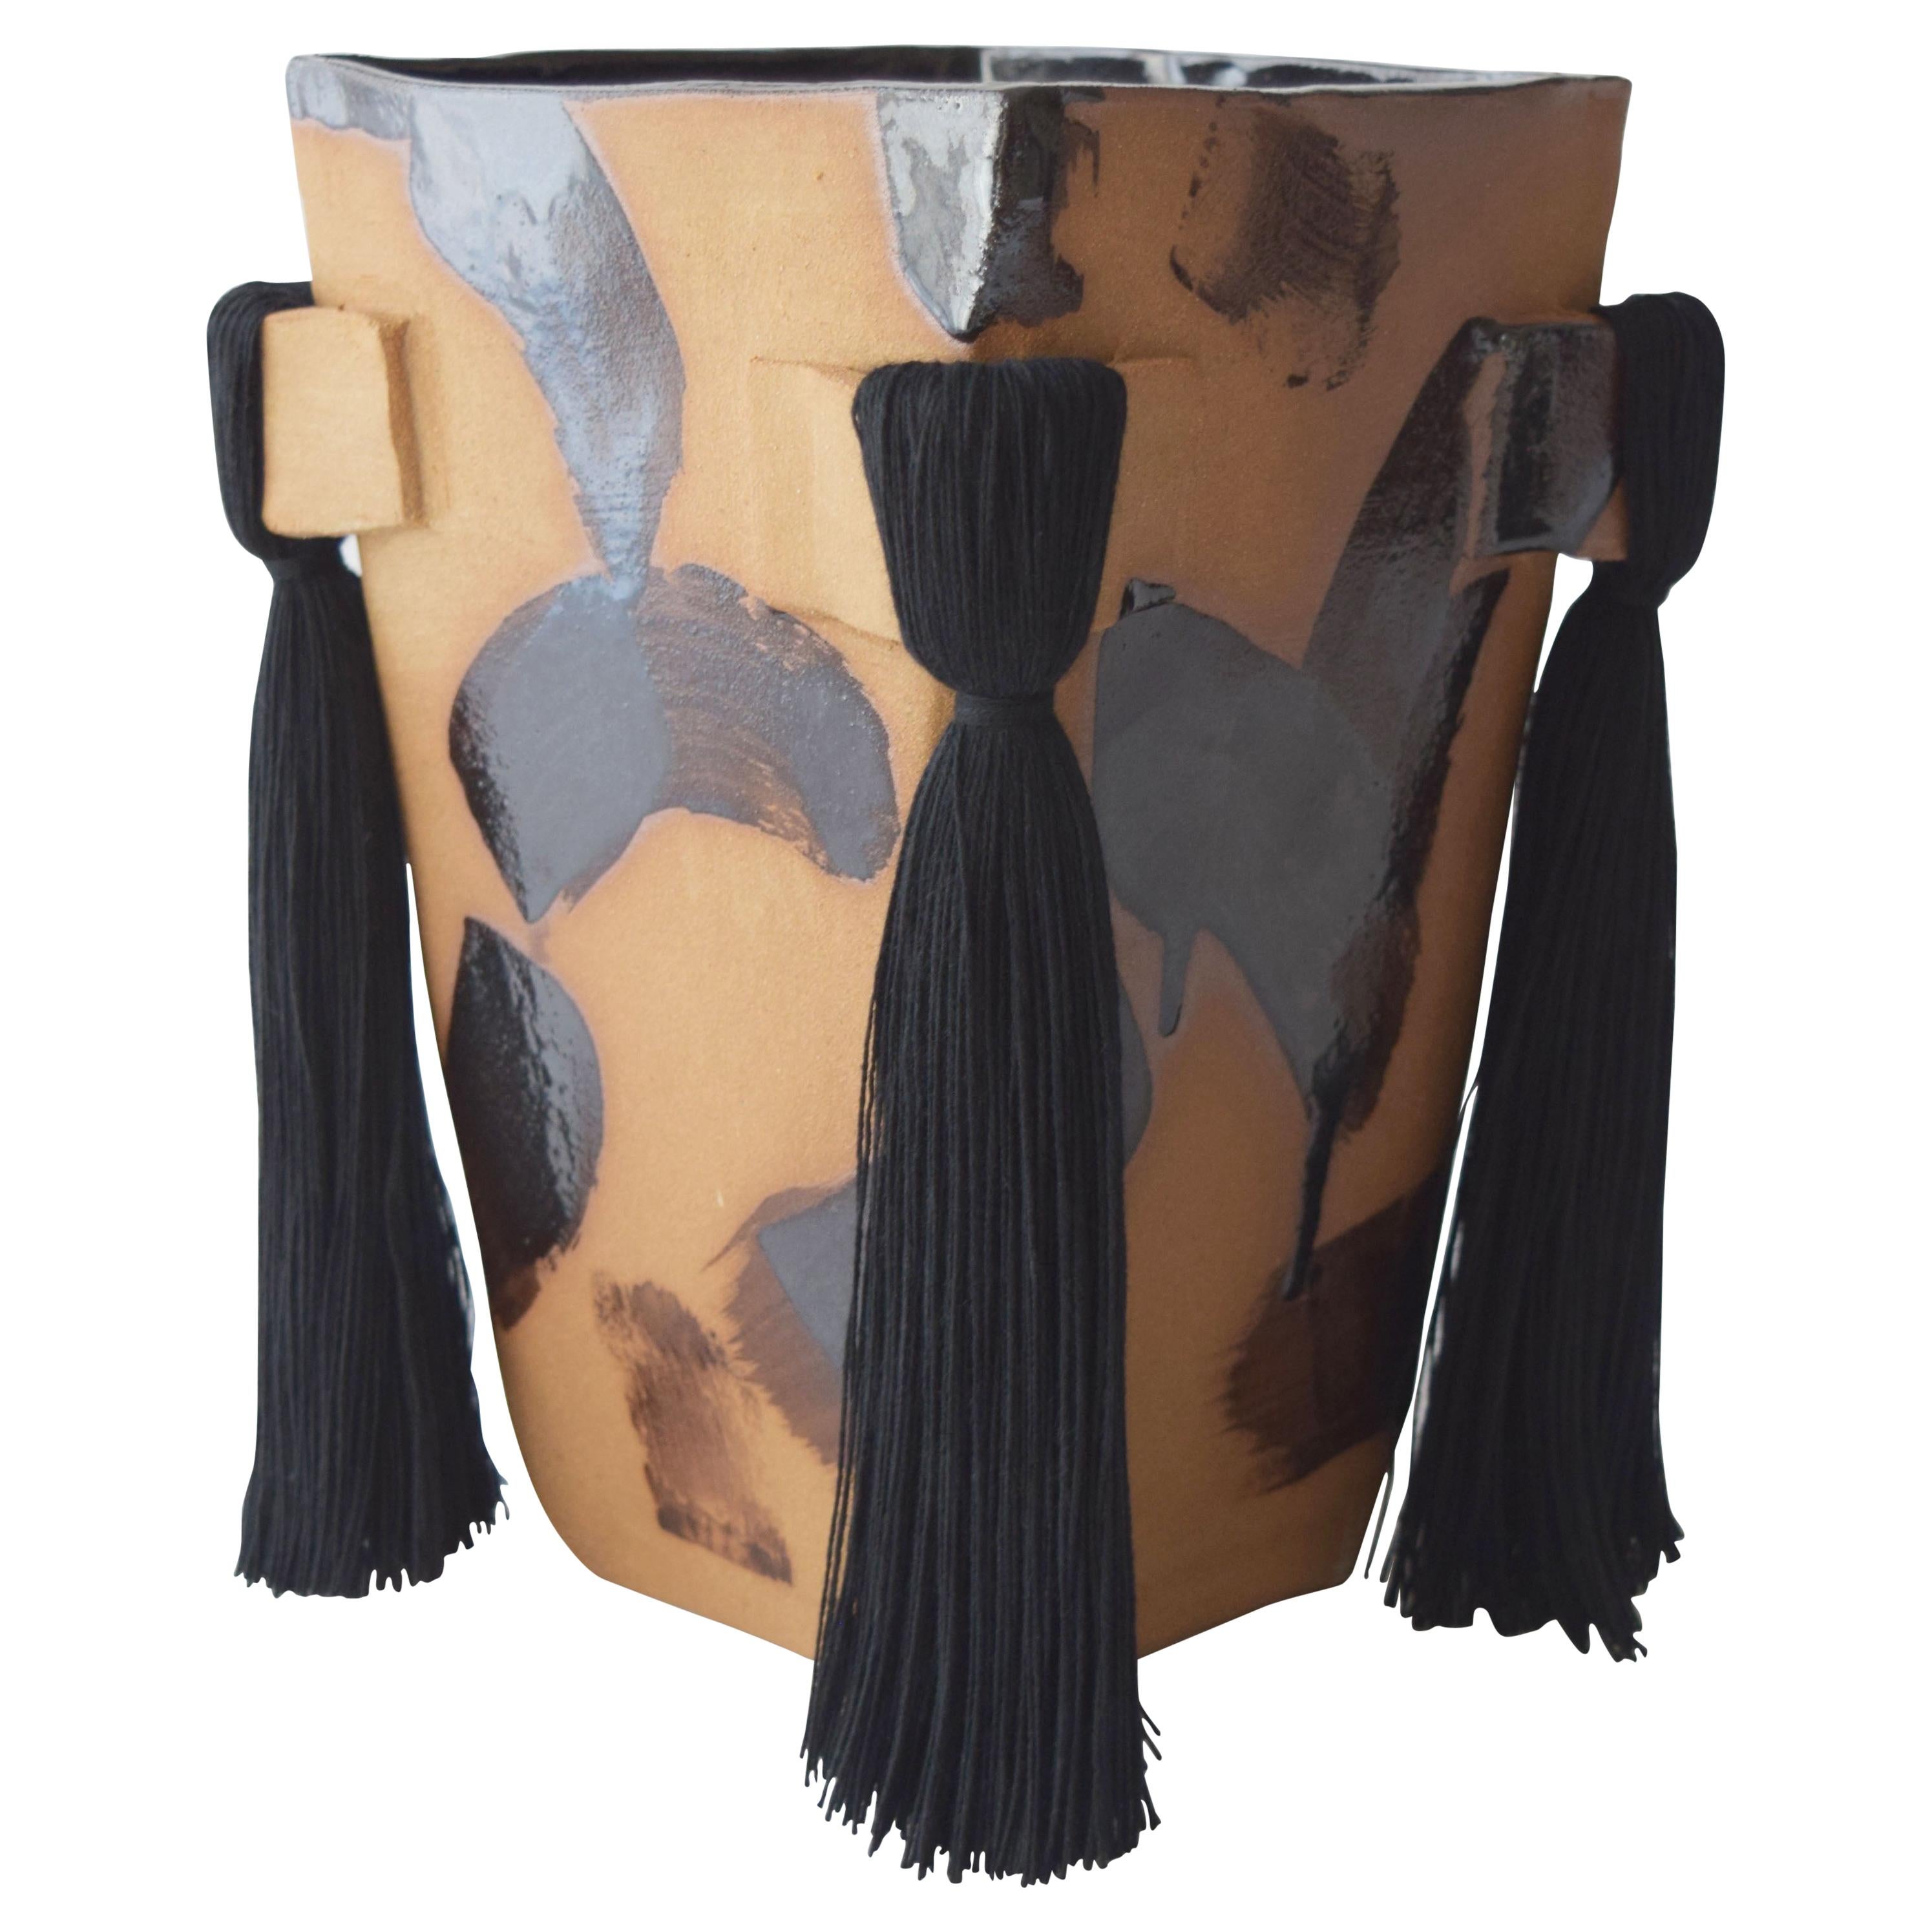 Handmade Ceramic Vase with Black Brushstrokes, Black Cotton Fringe